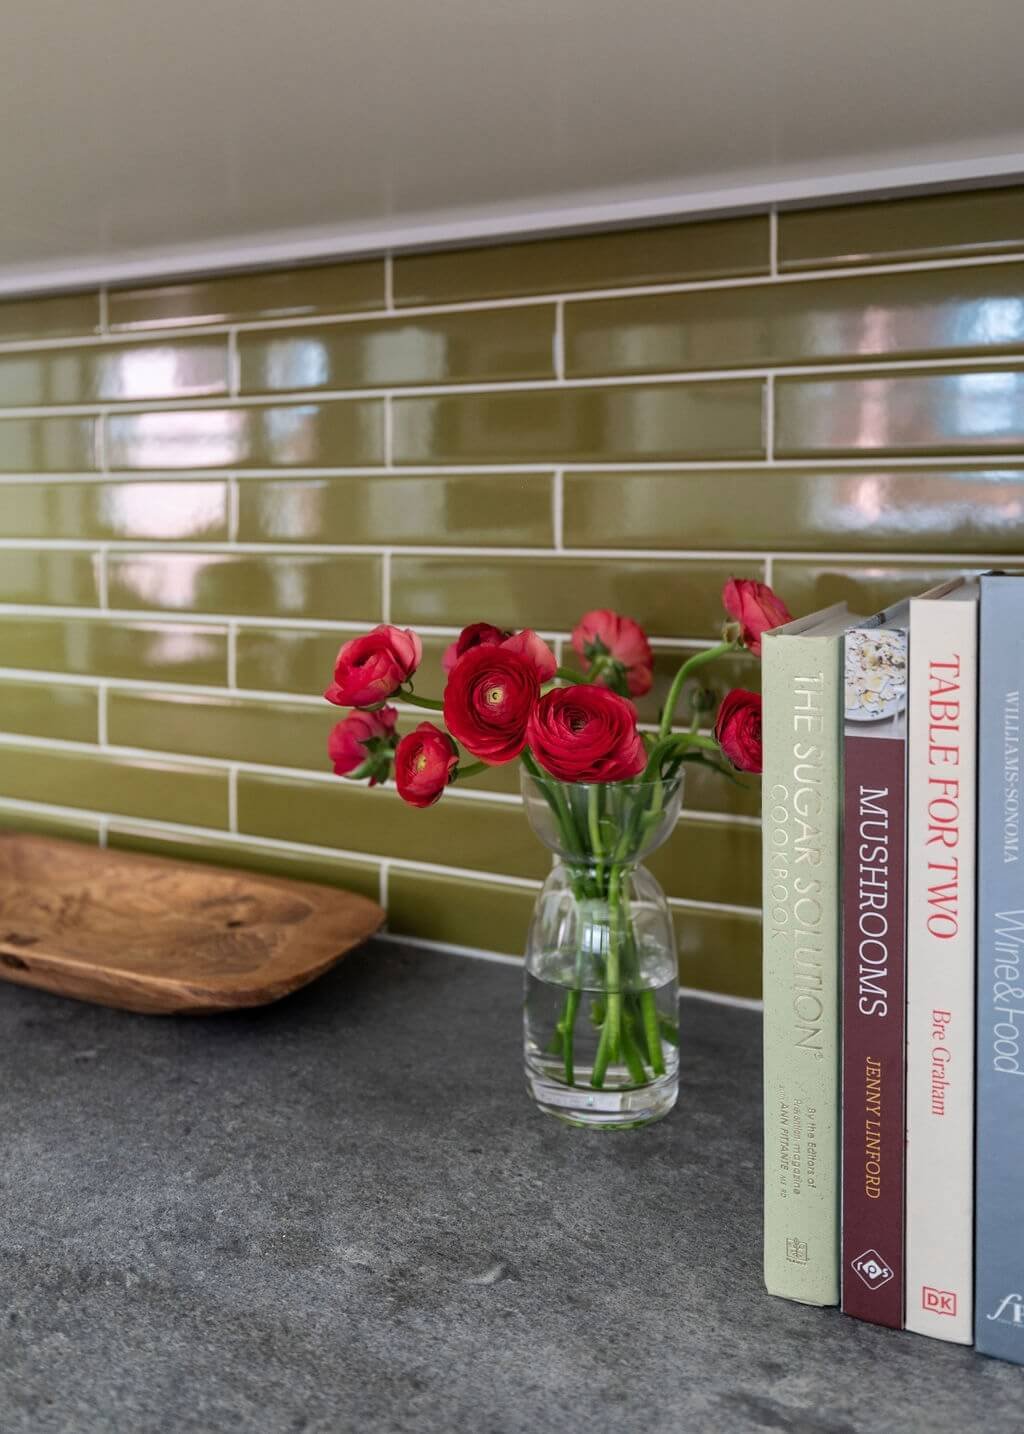 Cedar Berkeley Kitchen Remodel - Green Subway Tile Backsplash.jpg